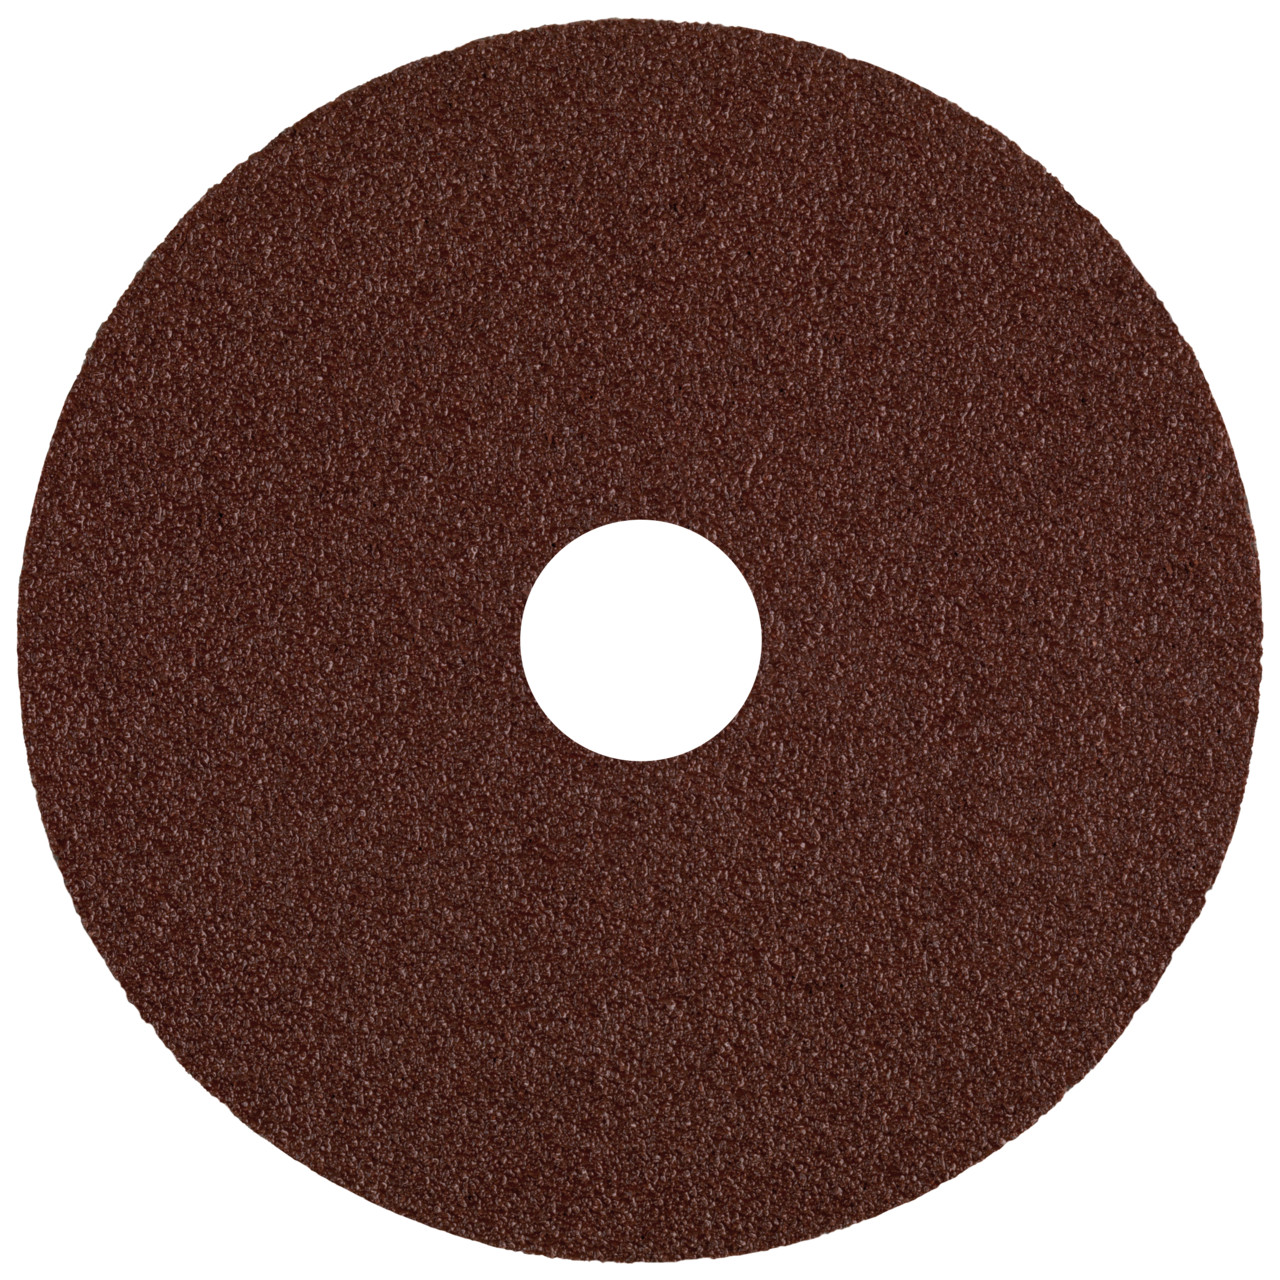 Tyrolit A-B02 V Vulcanised fibre disc DxH 180x22 For steel, non-ferrous metals and wood, P80, shape: DISC, Art. 34286511